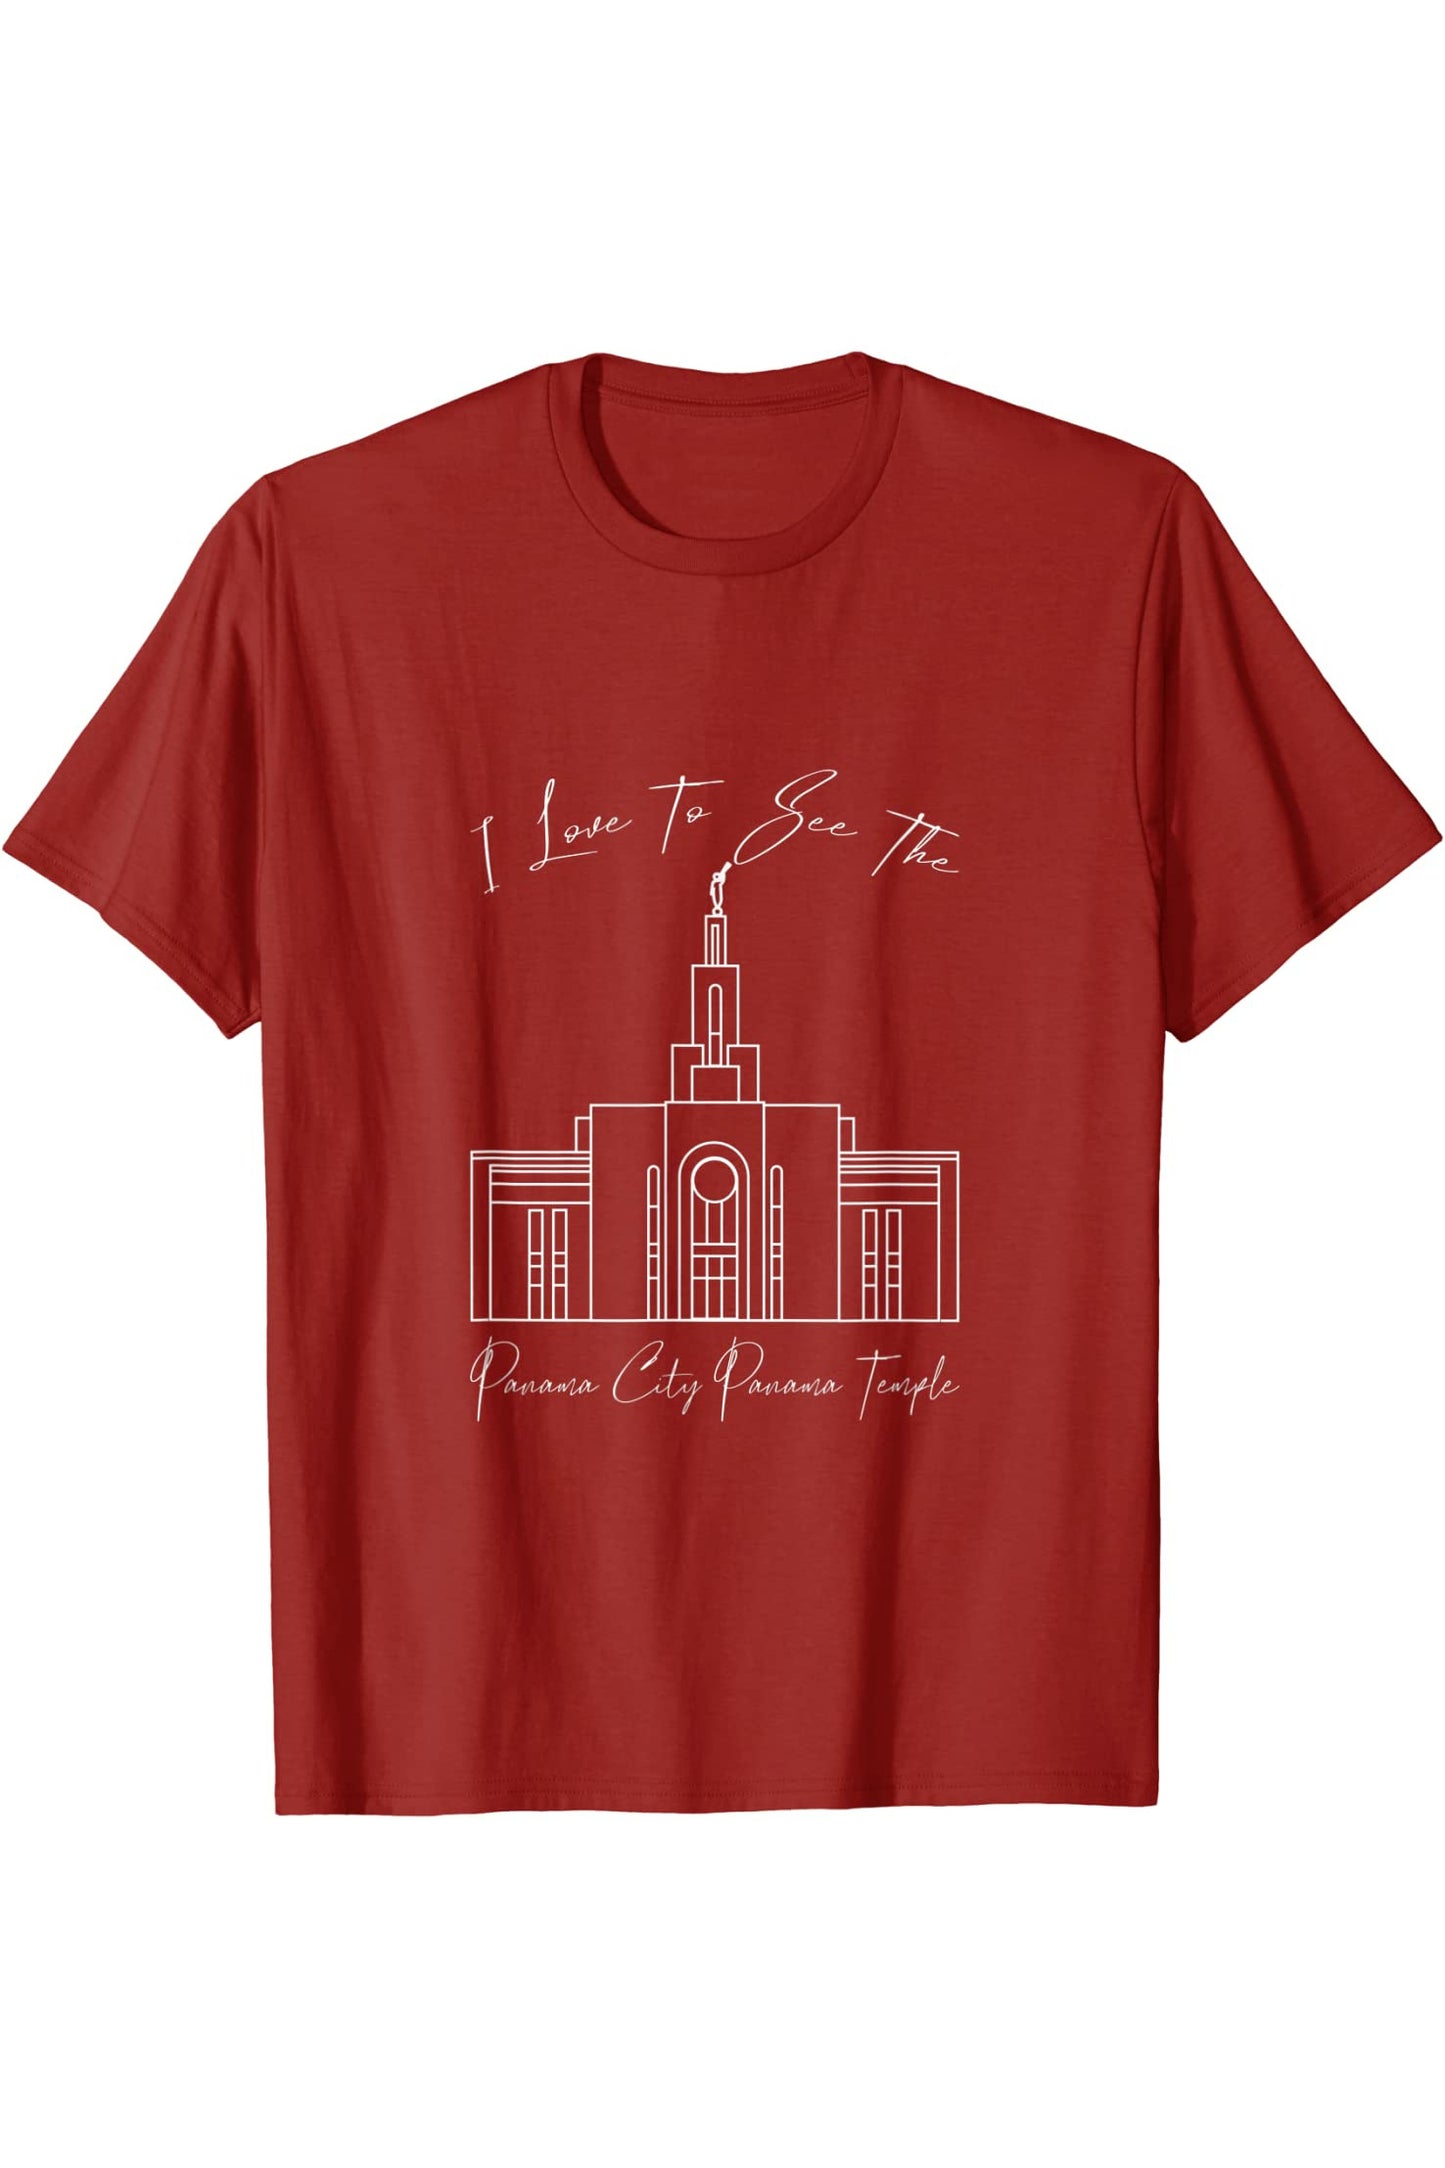 Panama City Panama Temple T-Shirt - Calligraphy Style (English) US